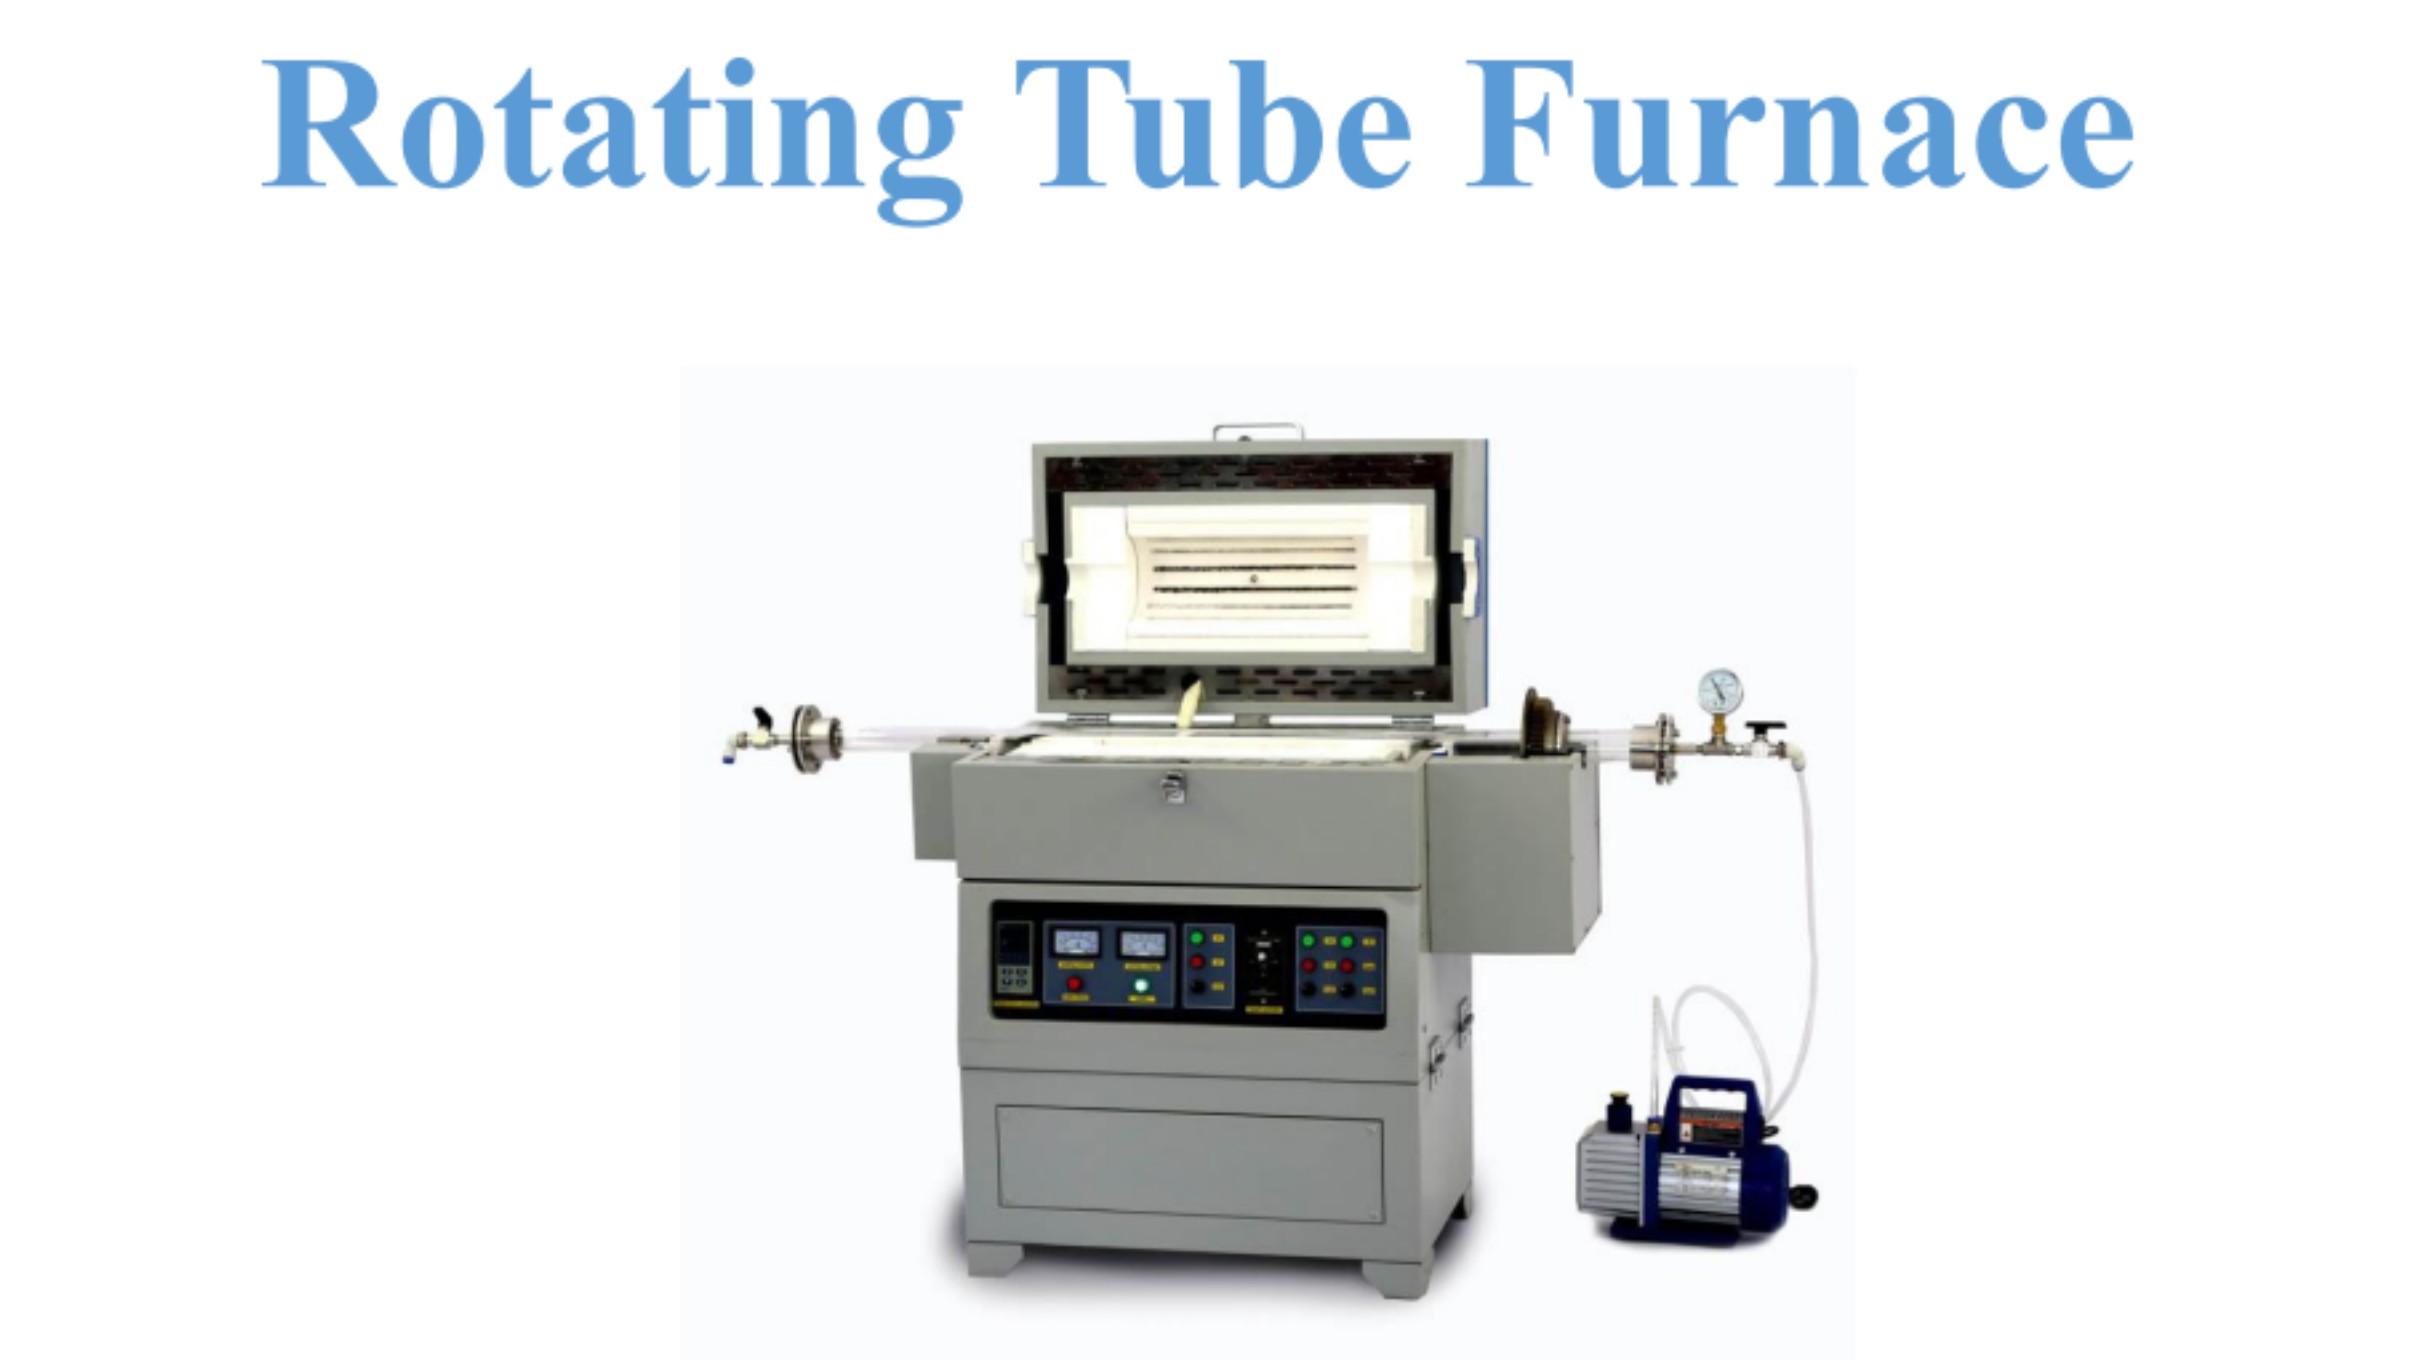 Rotating Tube Furnace